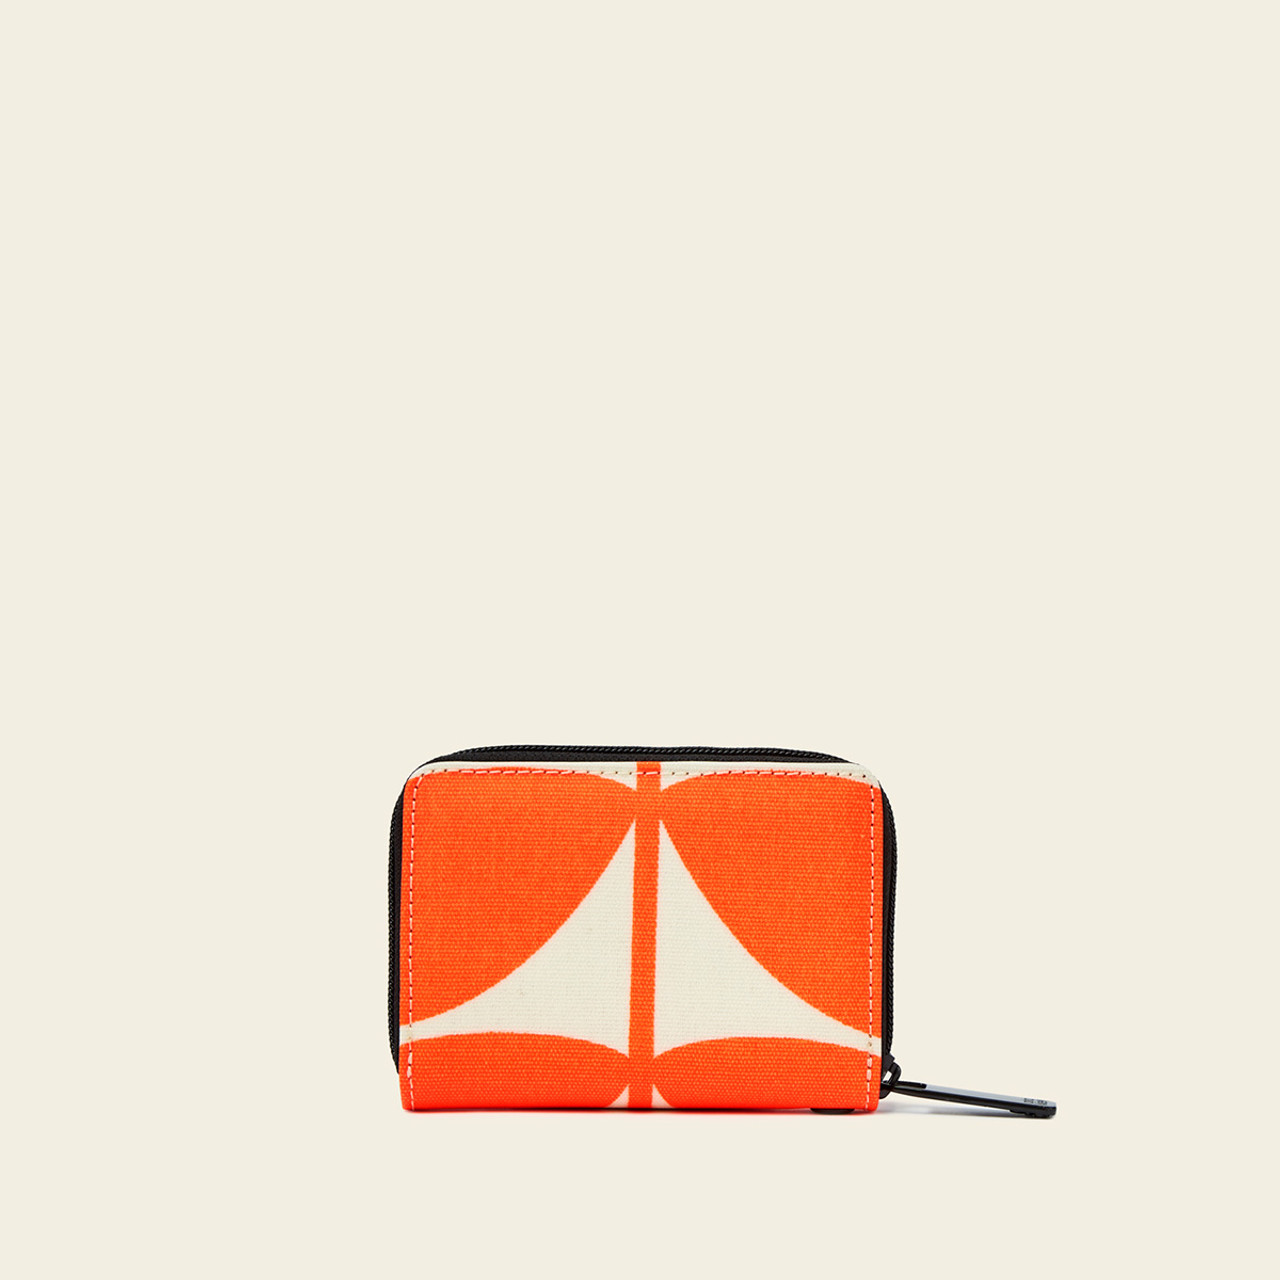 Amazon.com: Zipit Monster Mini Pouch Purse Neon Orange Zipper